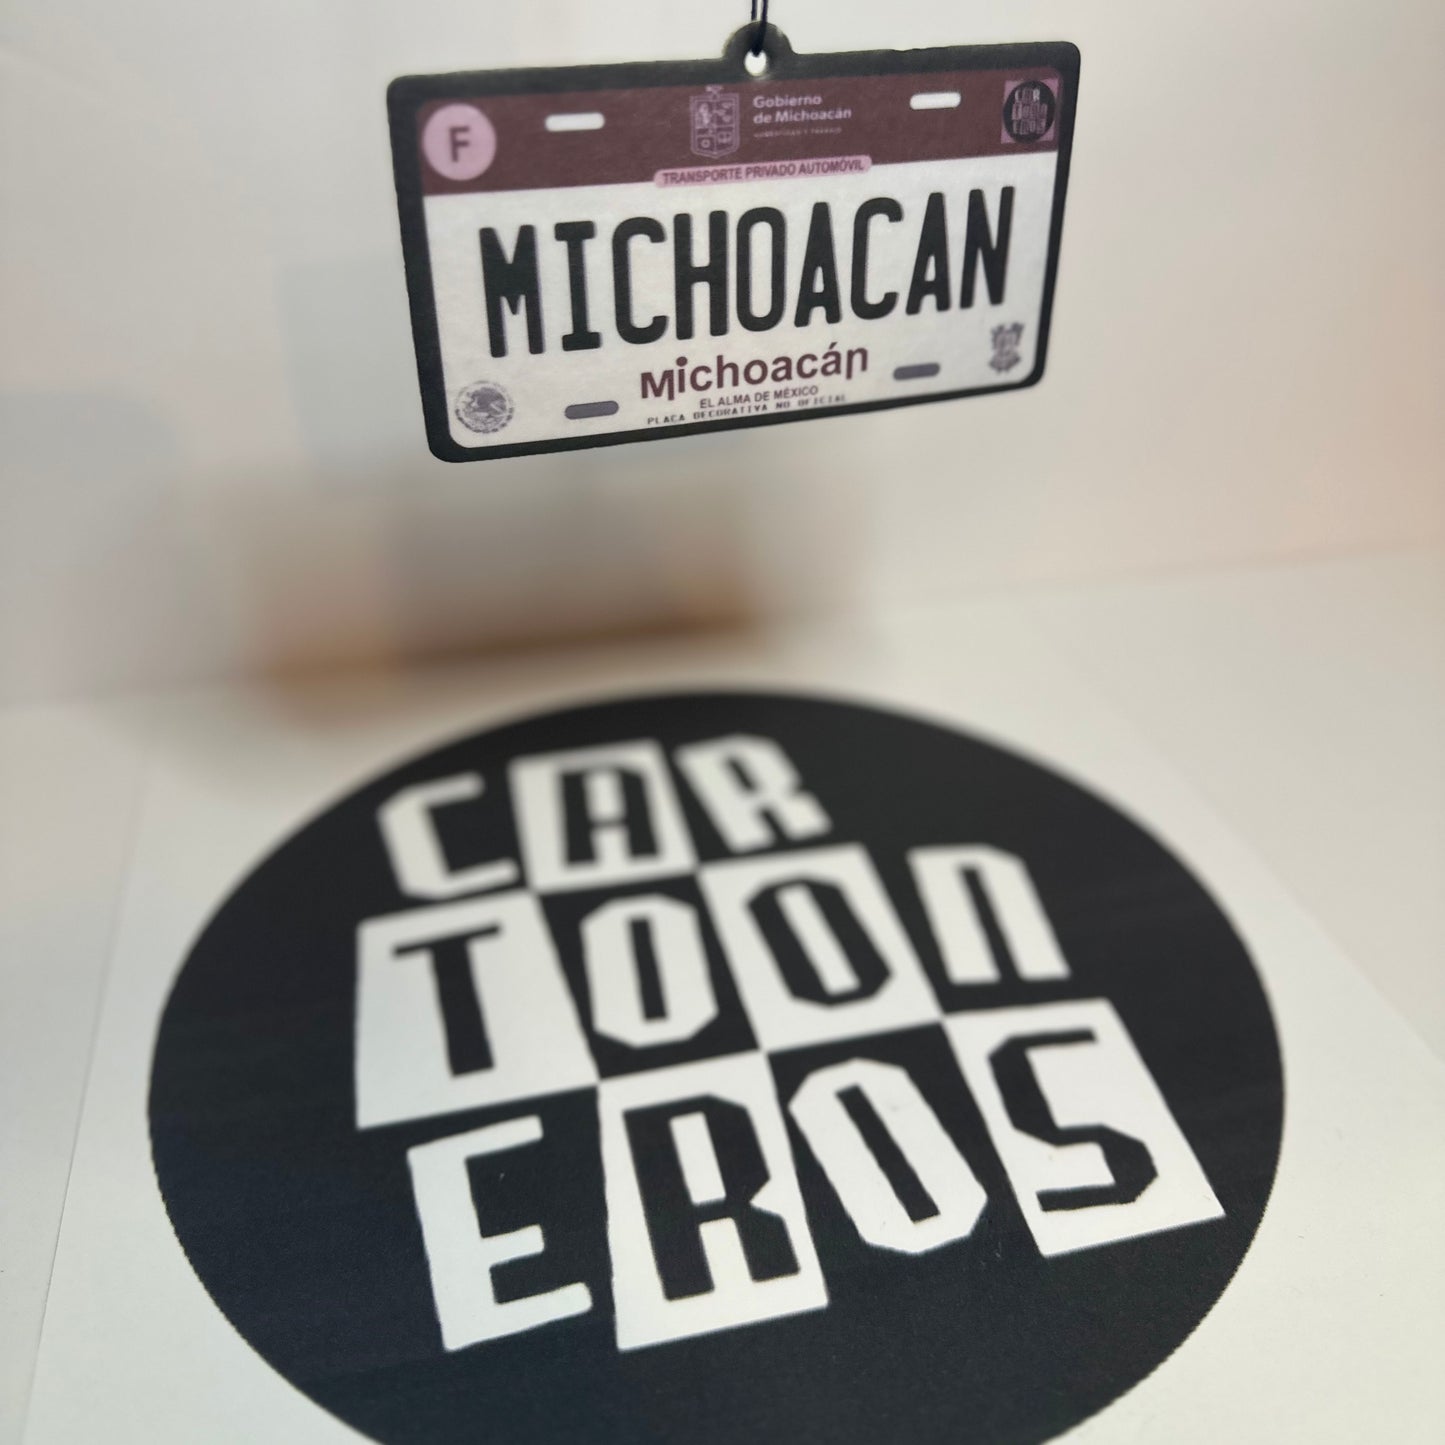 Michoacan's Plate Air Freshener